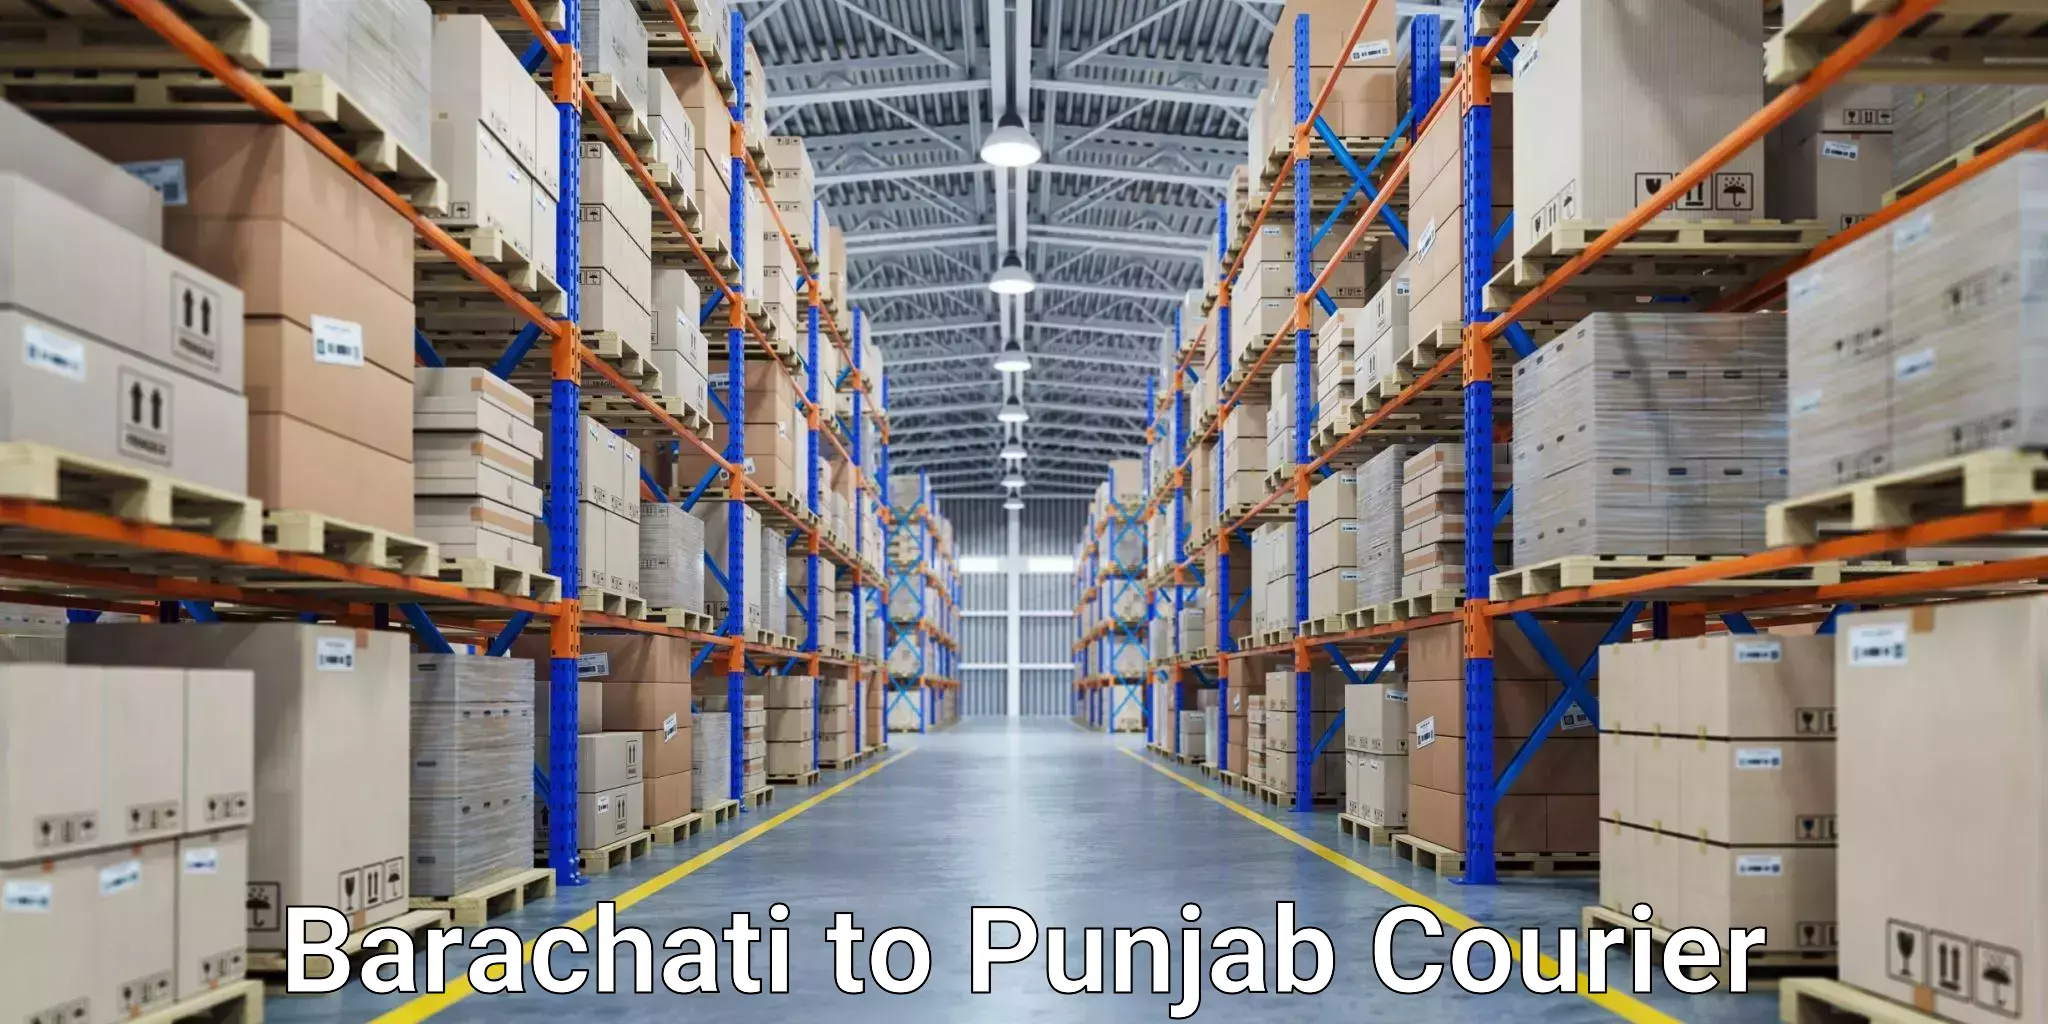 Bulk courier orders Barachati to Punjab